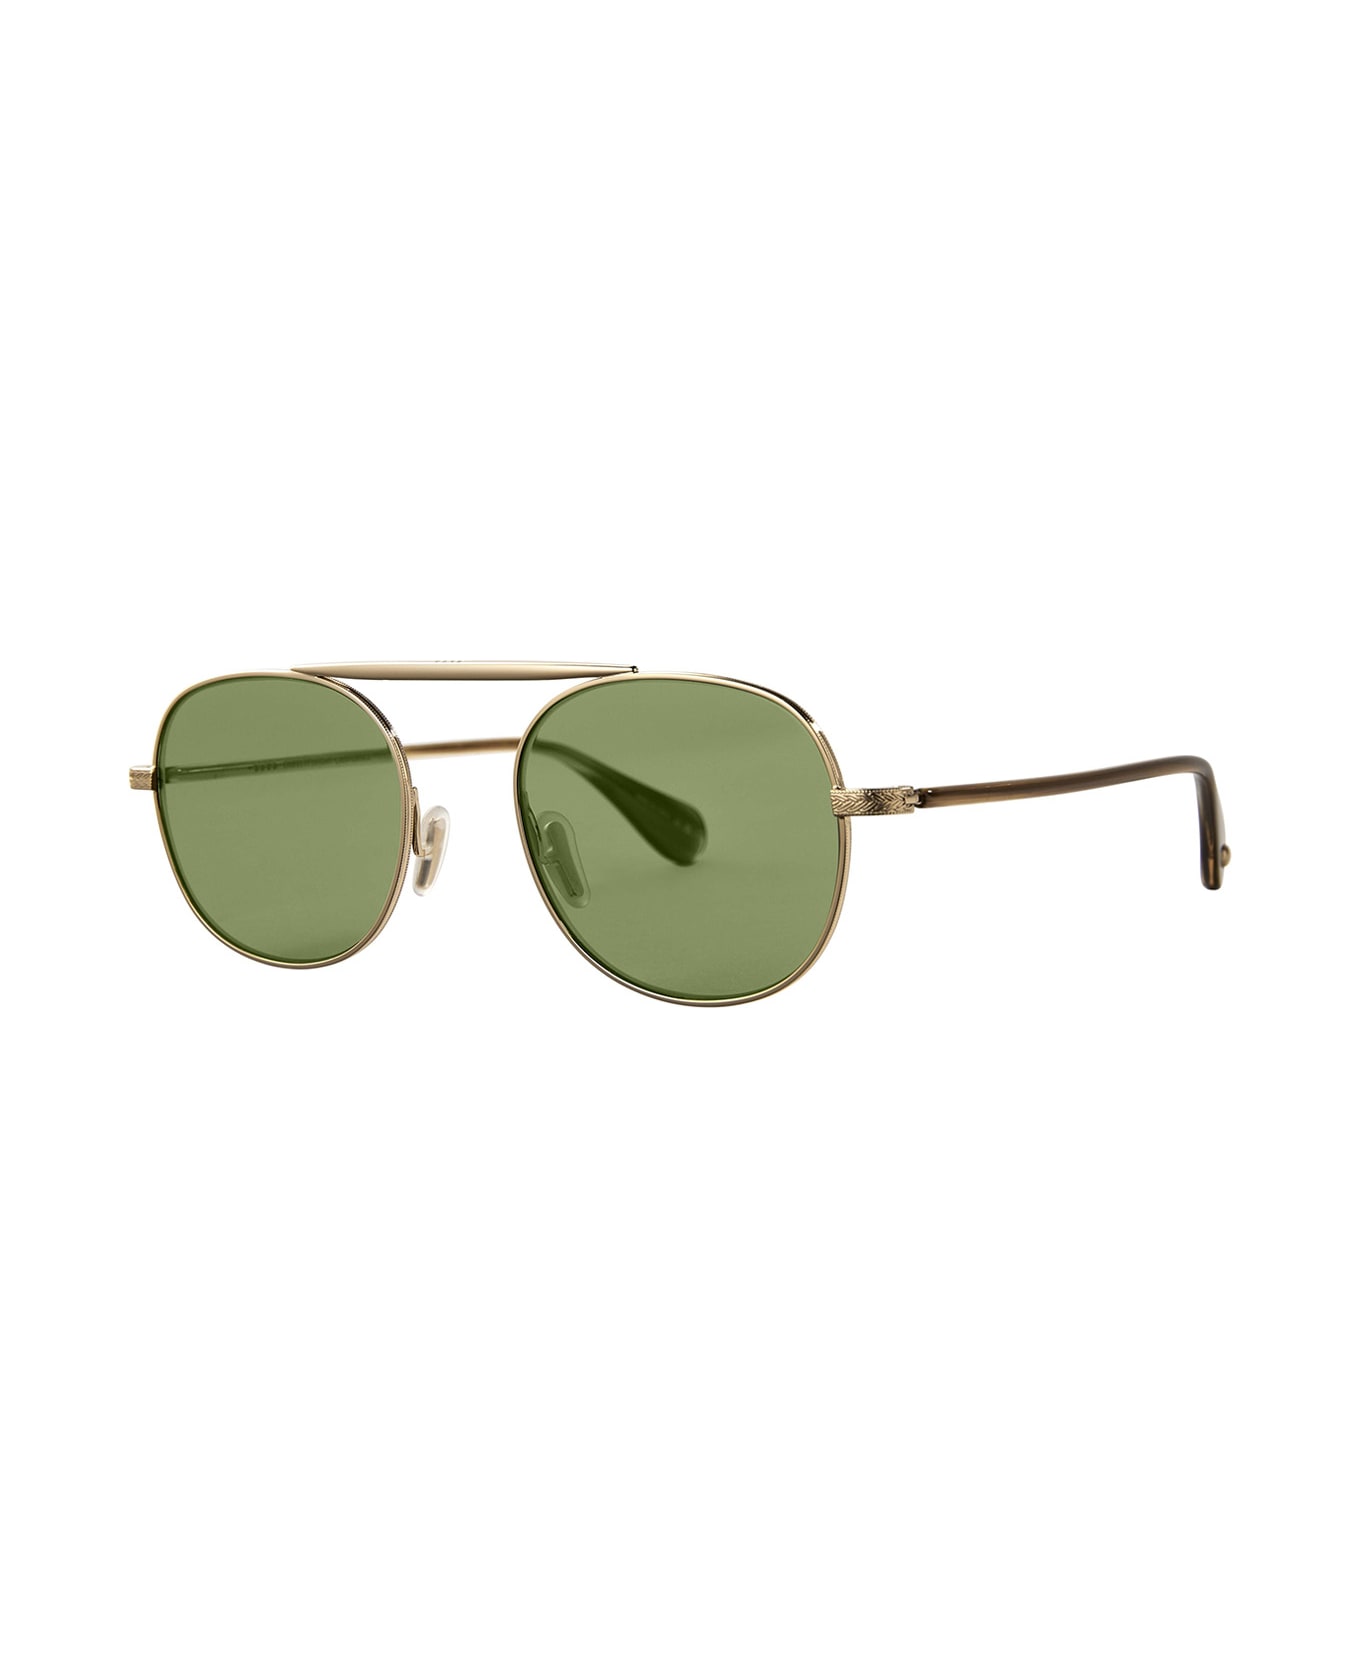 Garrett Leight Van Buren Ii Sun Gold-sap Tortoise/flat Pure Green Sunglasses - Gold-Sap Tortoise/Flat Pure Green